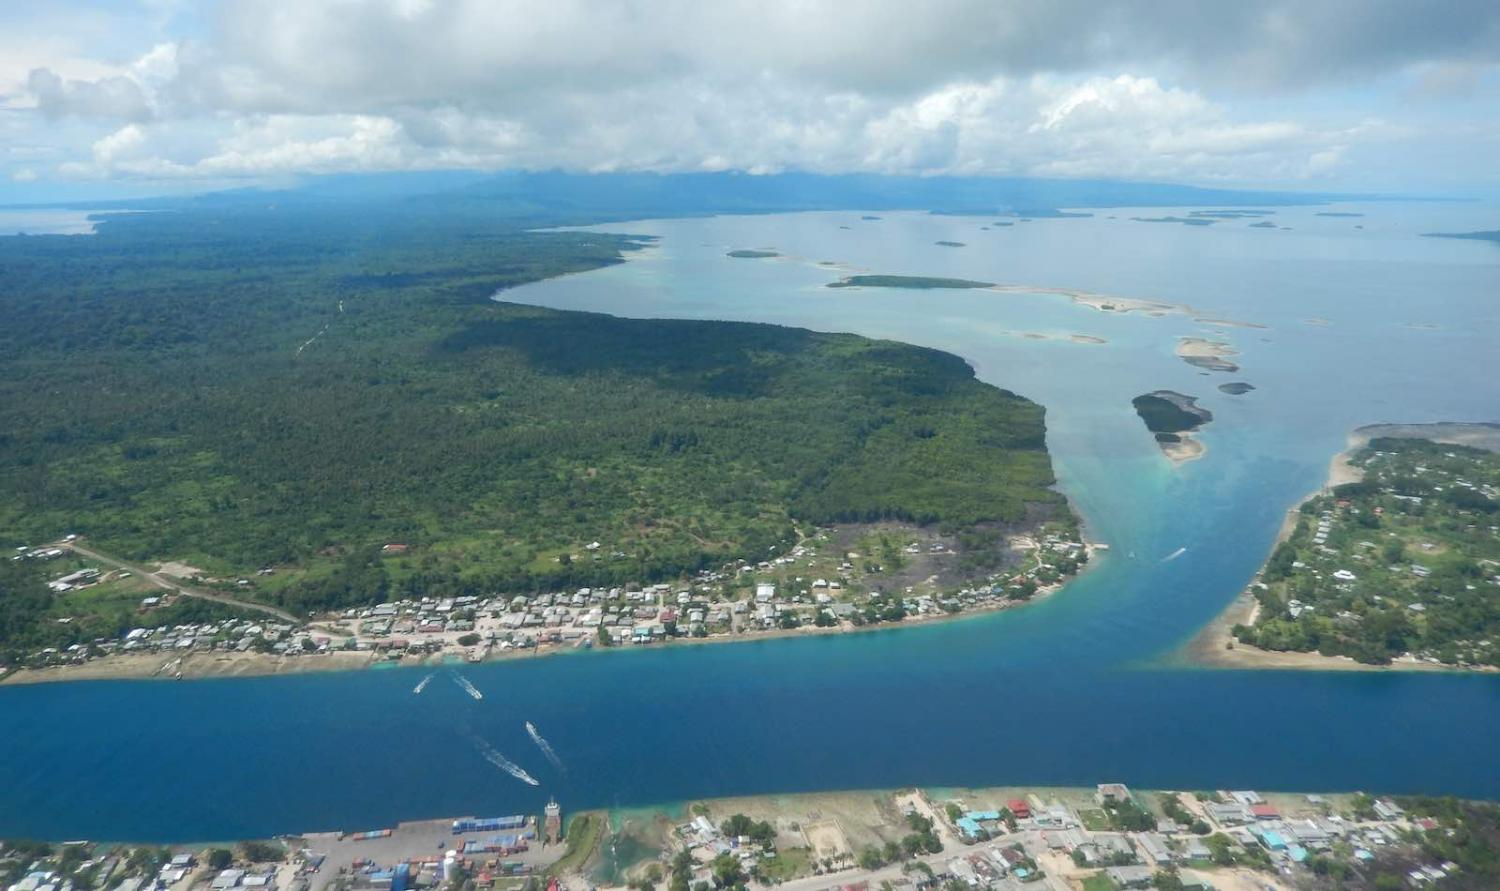 Buka, capital of Bougainville (Photo: Annmaree O'Keeffe)